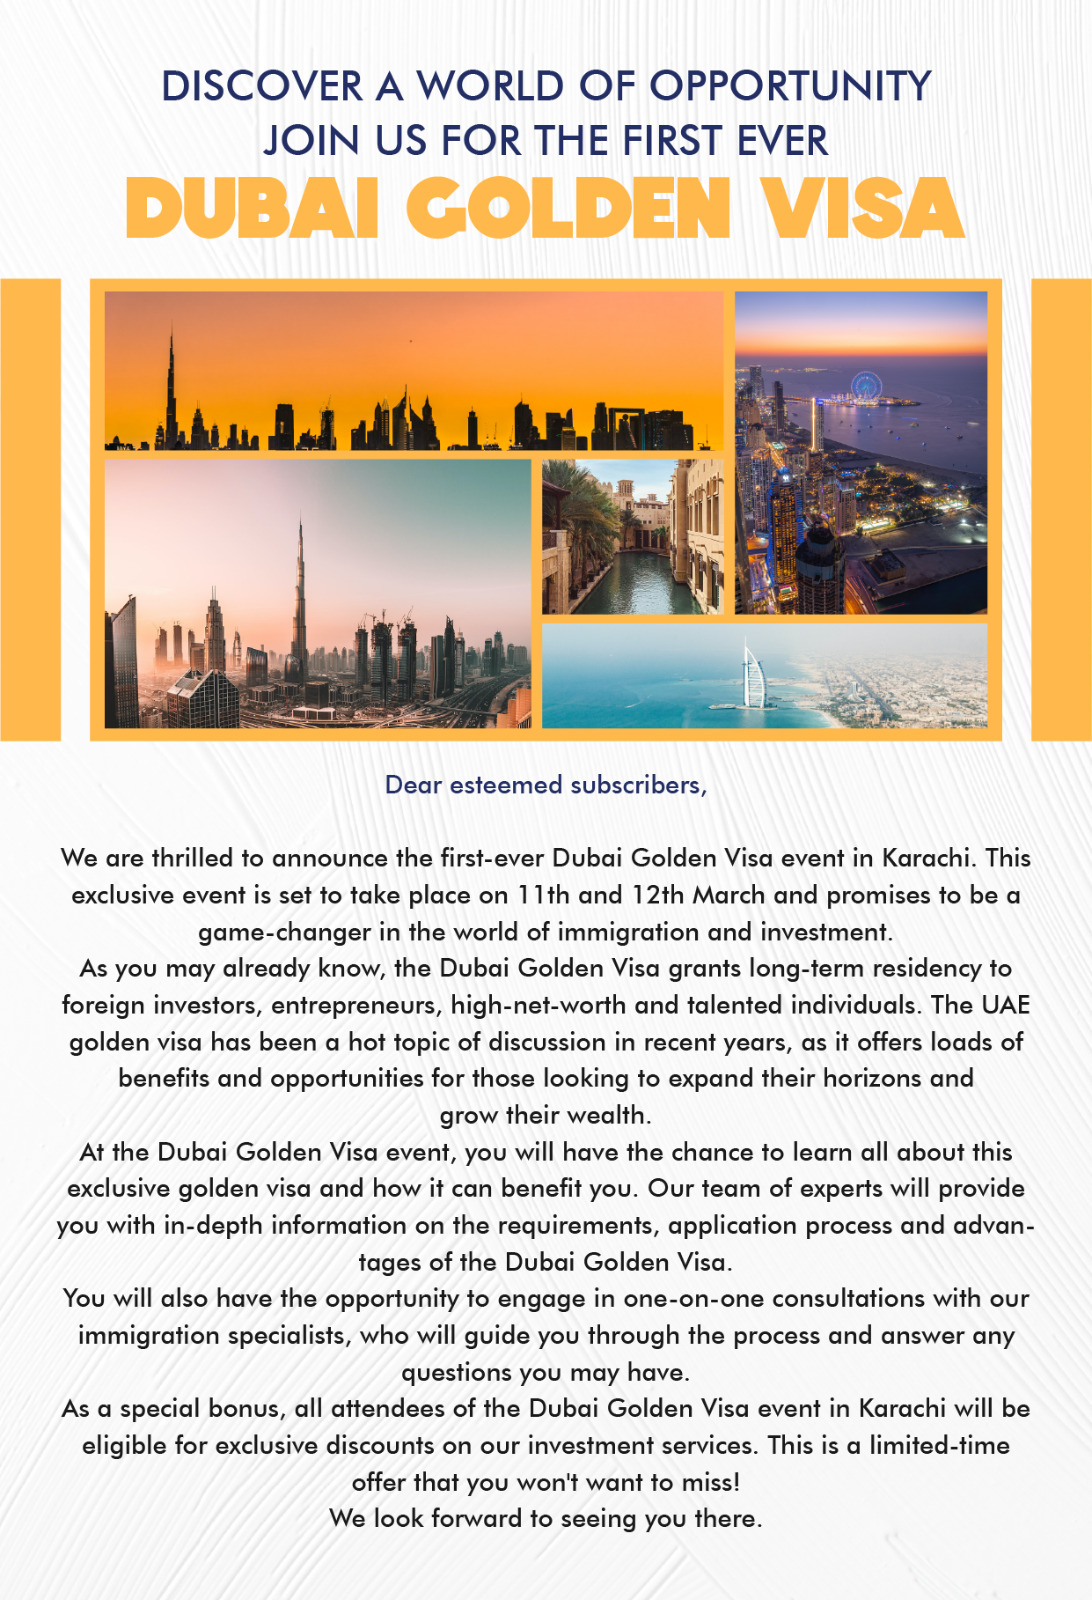 Dubai Golden Visa Review: